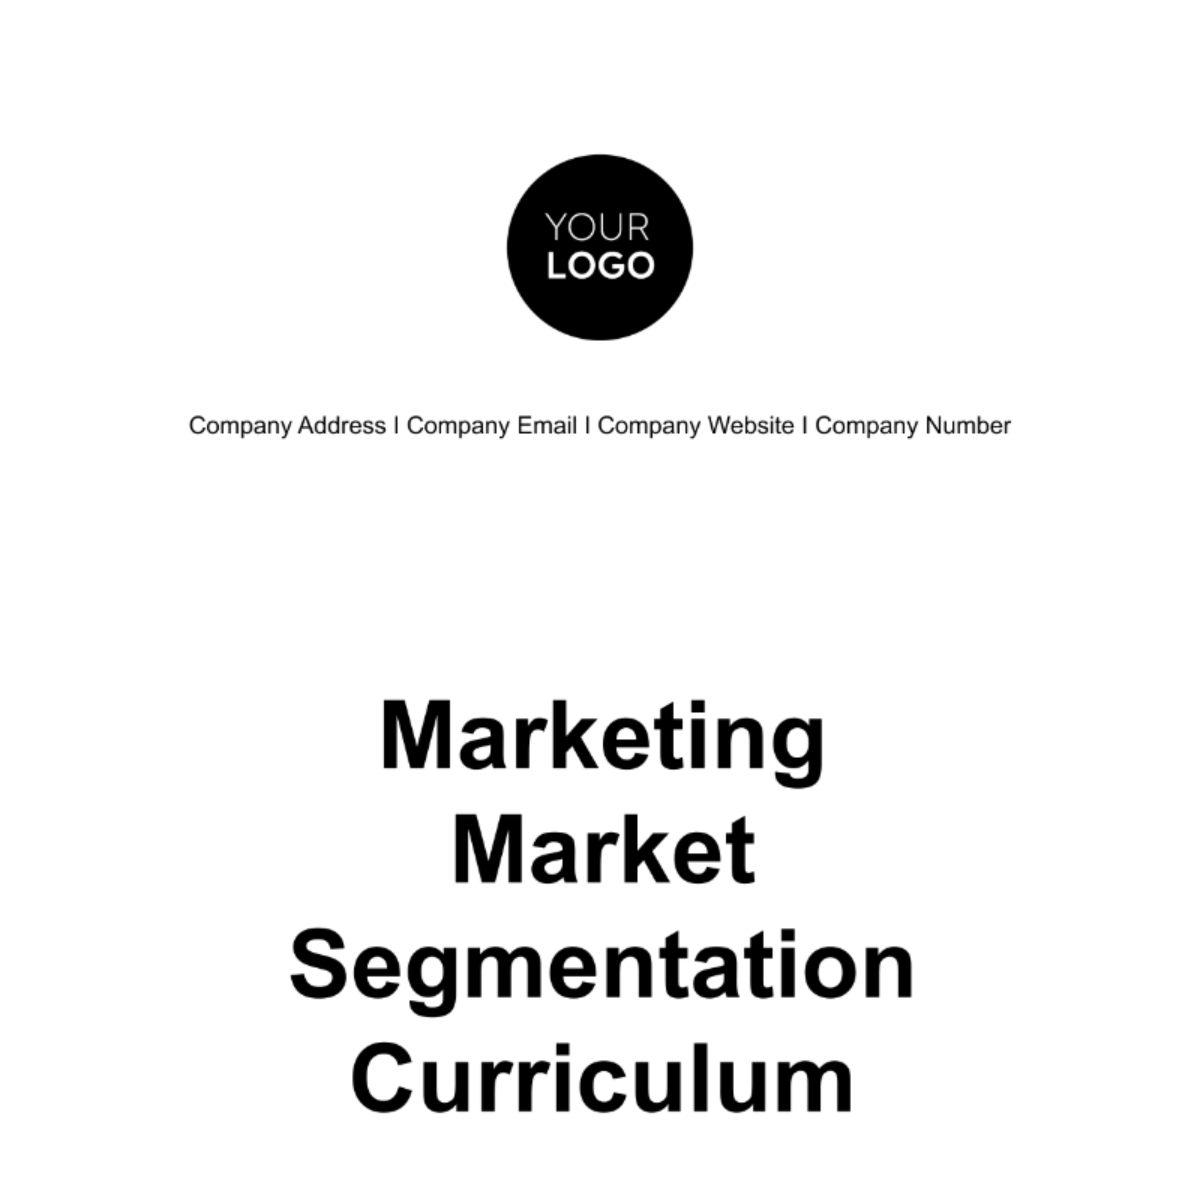 Marketing Market Segmentation Curriculum Template